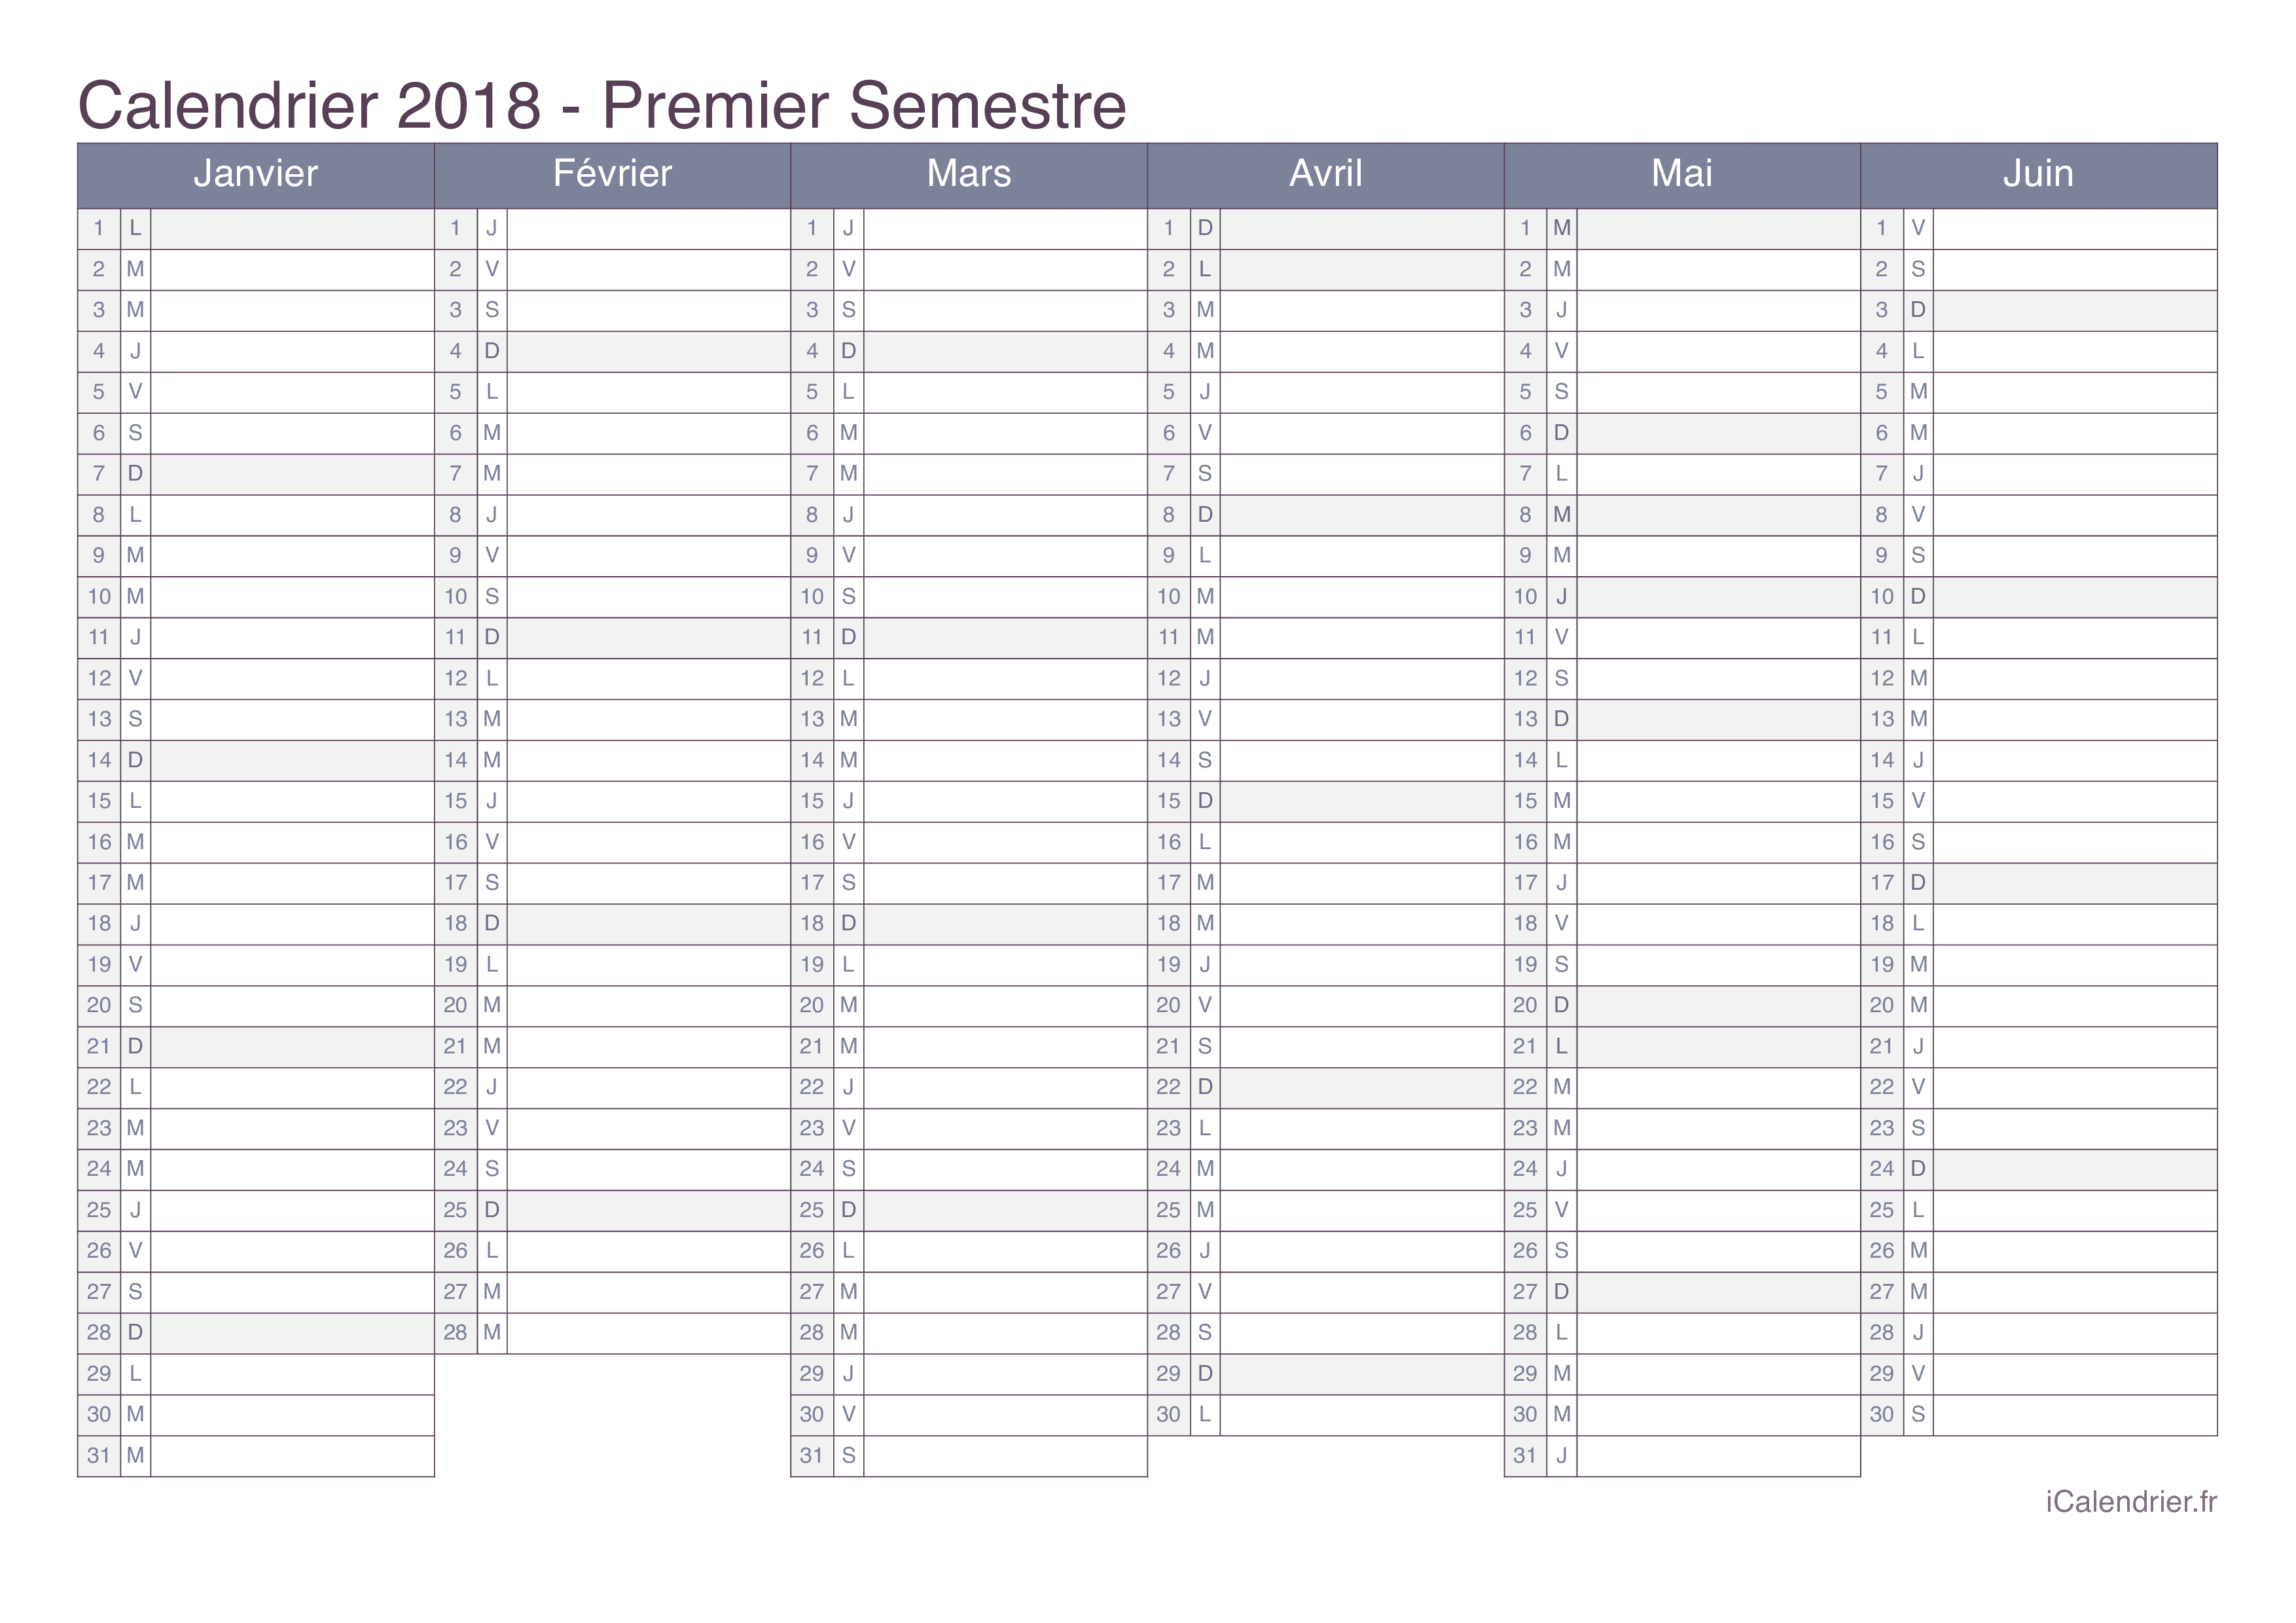 Calendrier par semestre 2018 - Office